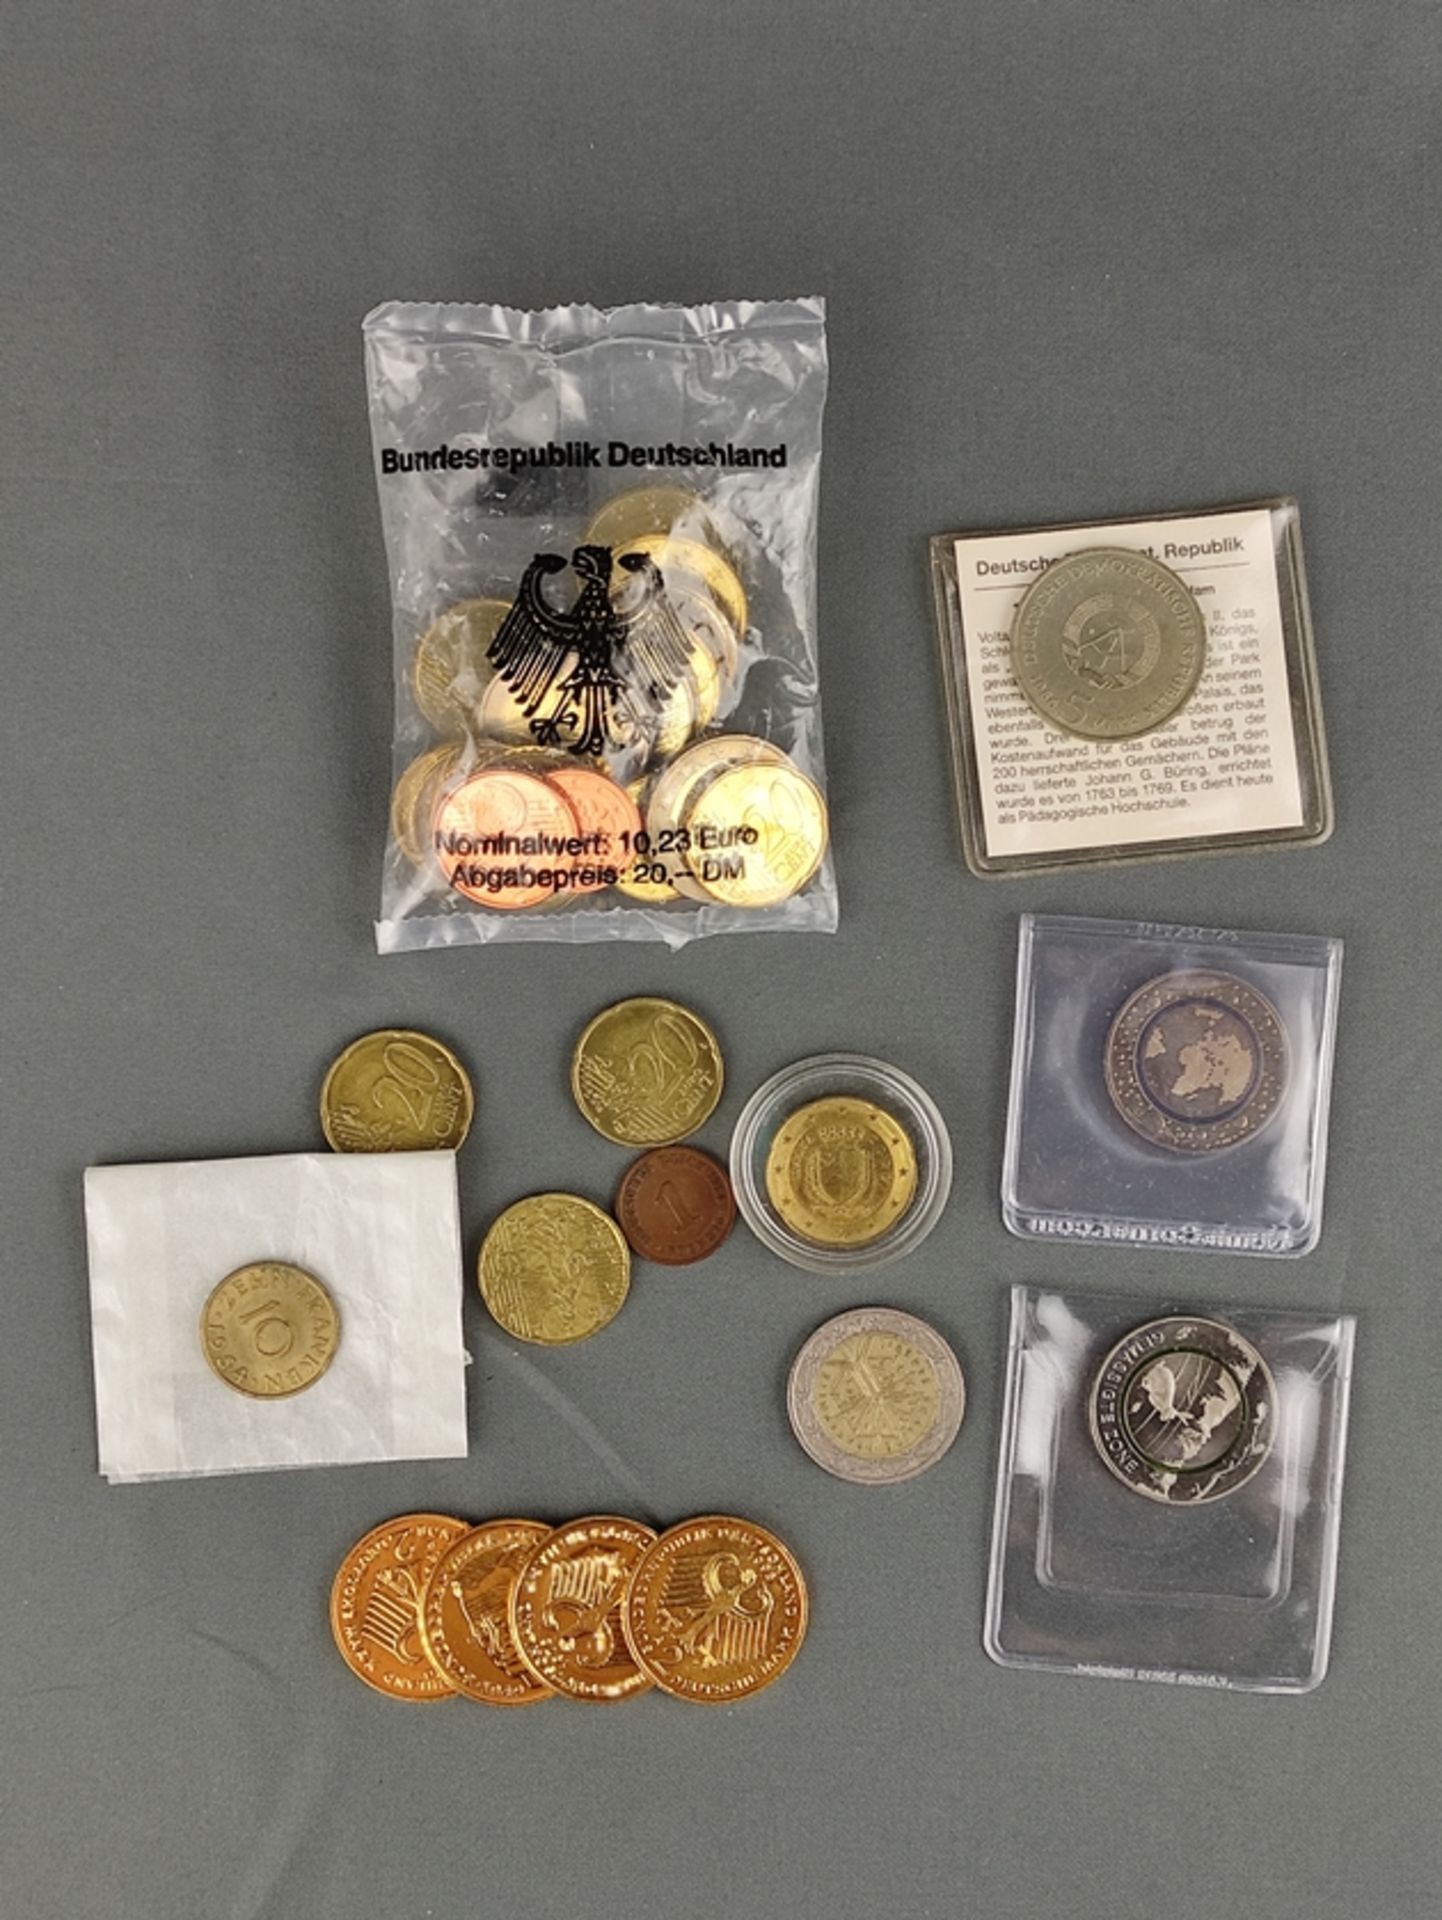 Münz-Konvolut, 15 Teile, bestehend aus 1xEuro Starterkit BRD, Nominalwert 10,23Euro, 1x20 Cent Malt